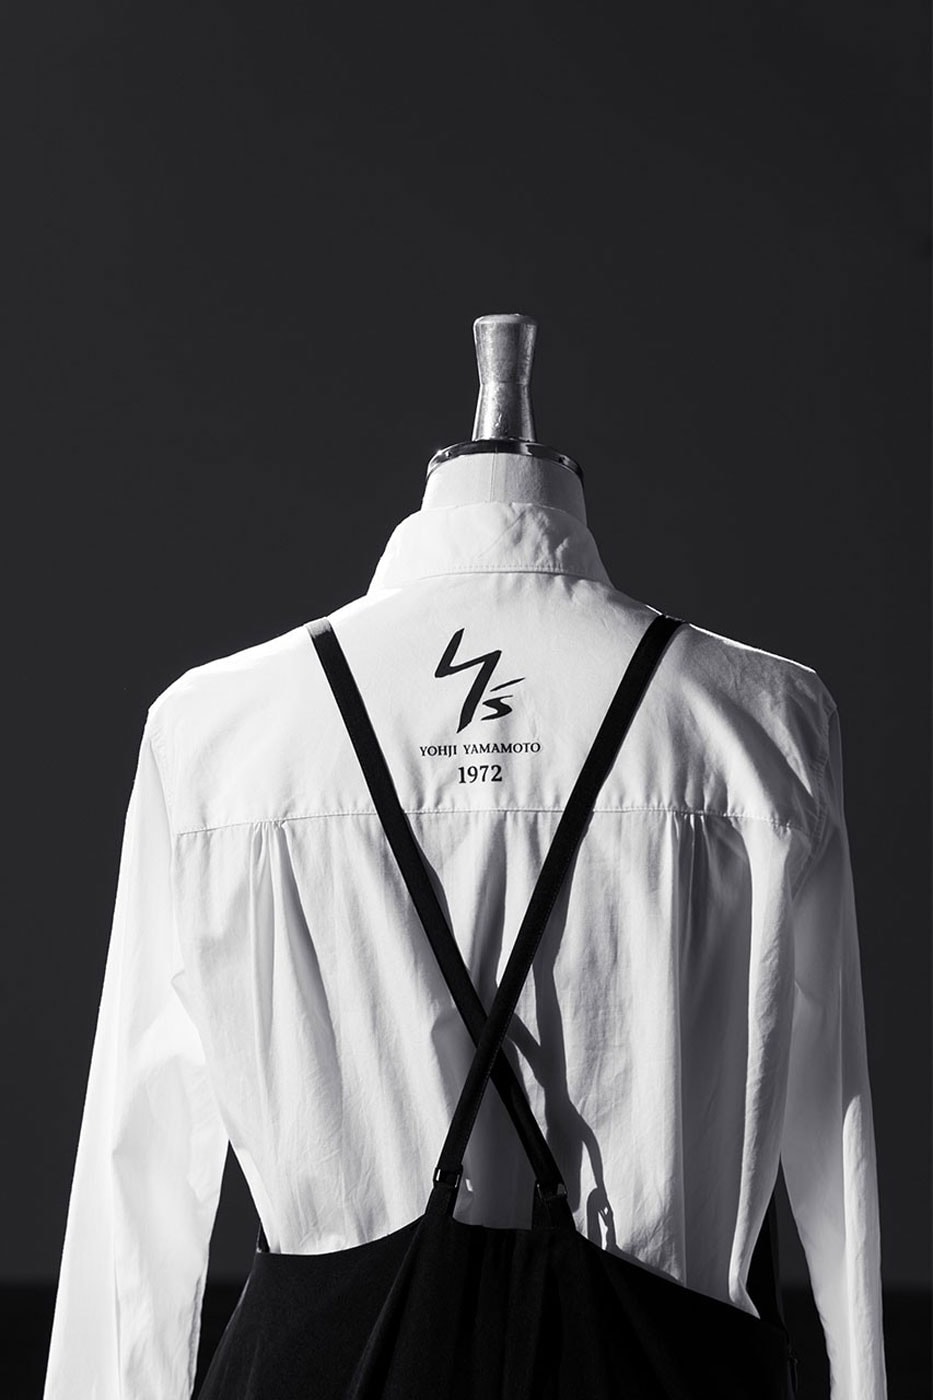 yohji yamamoto ys 1982 50 year anniversary collection jackets gabardine double button workwear shirts suspenders contrast stitch release info date price